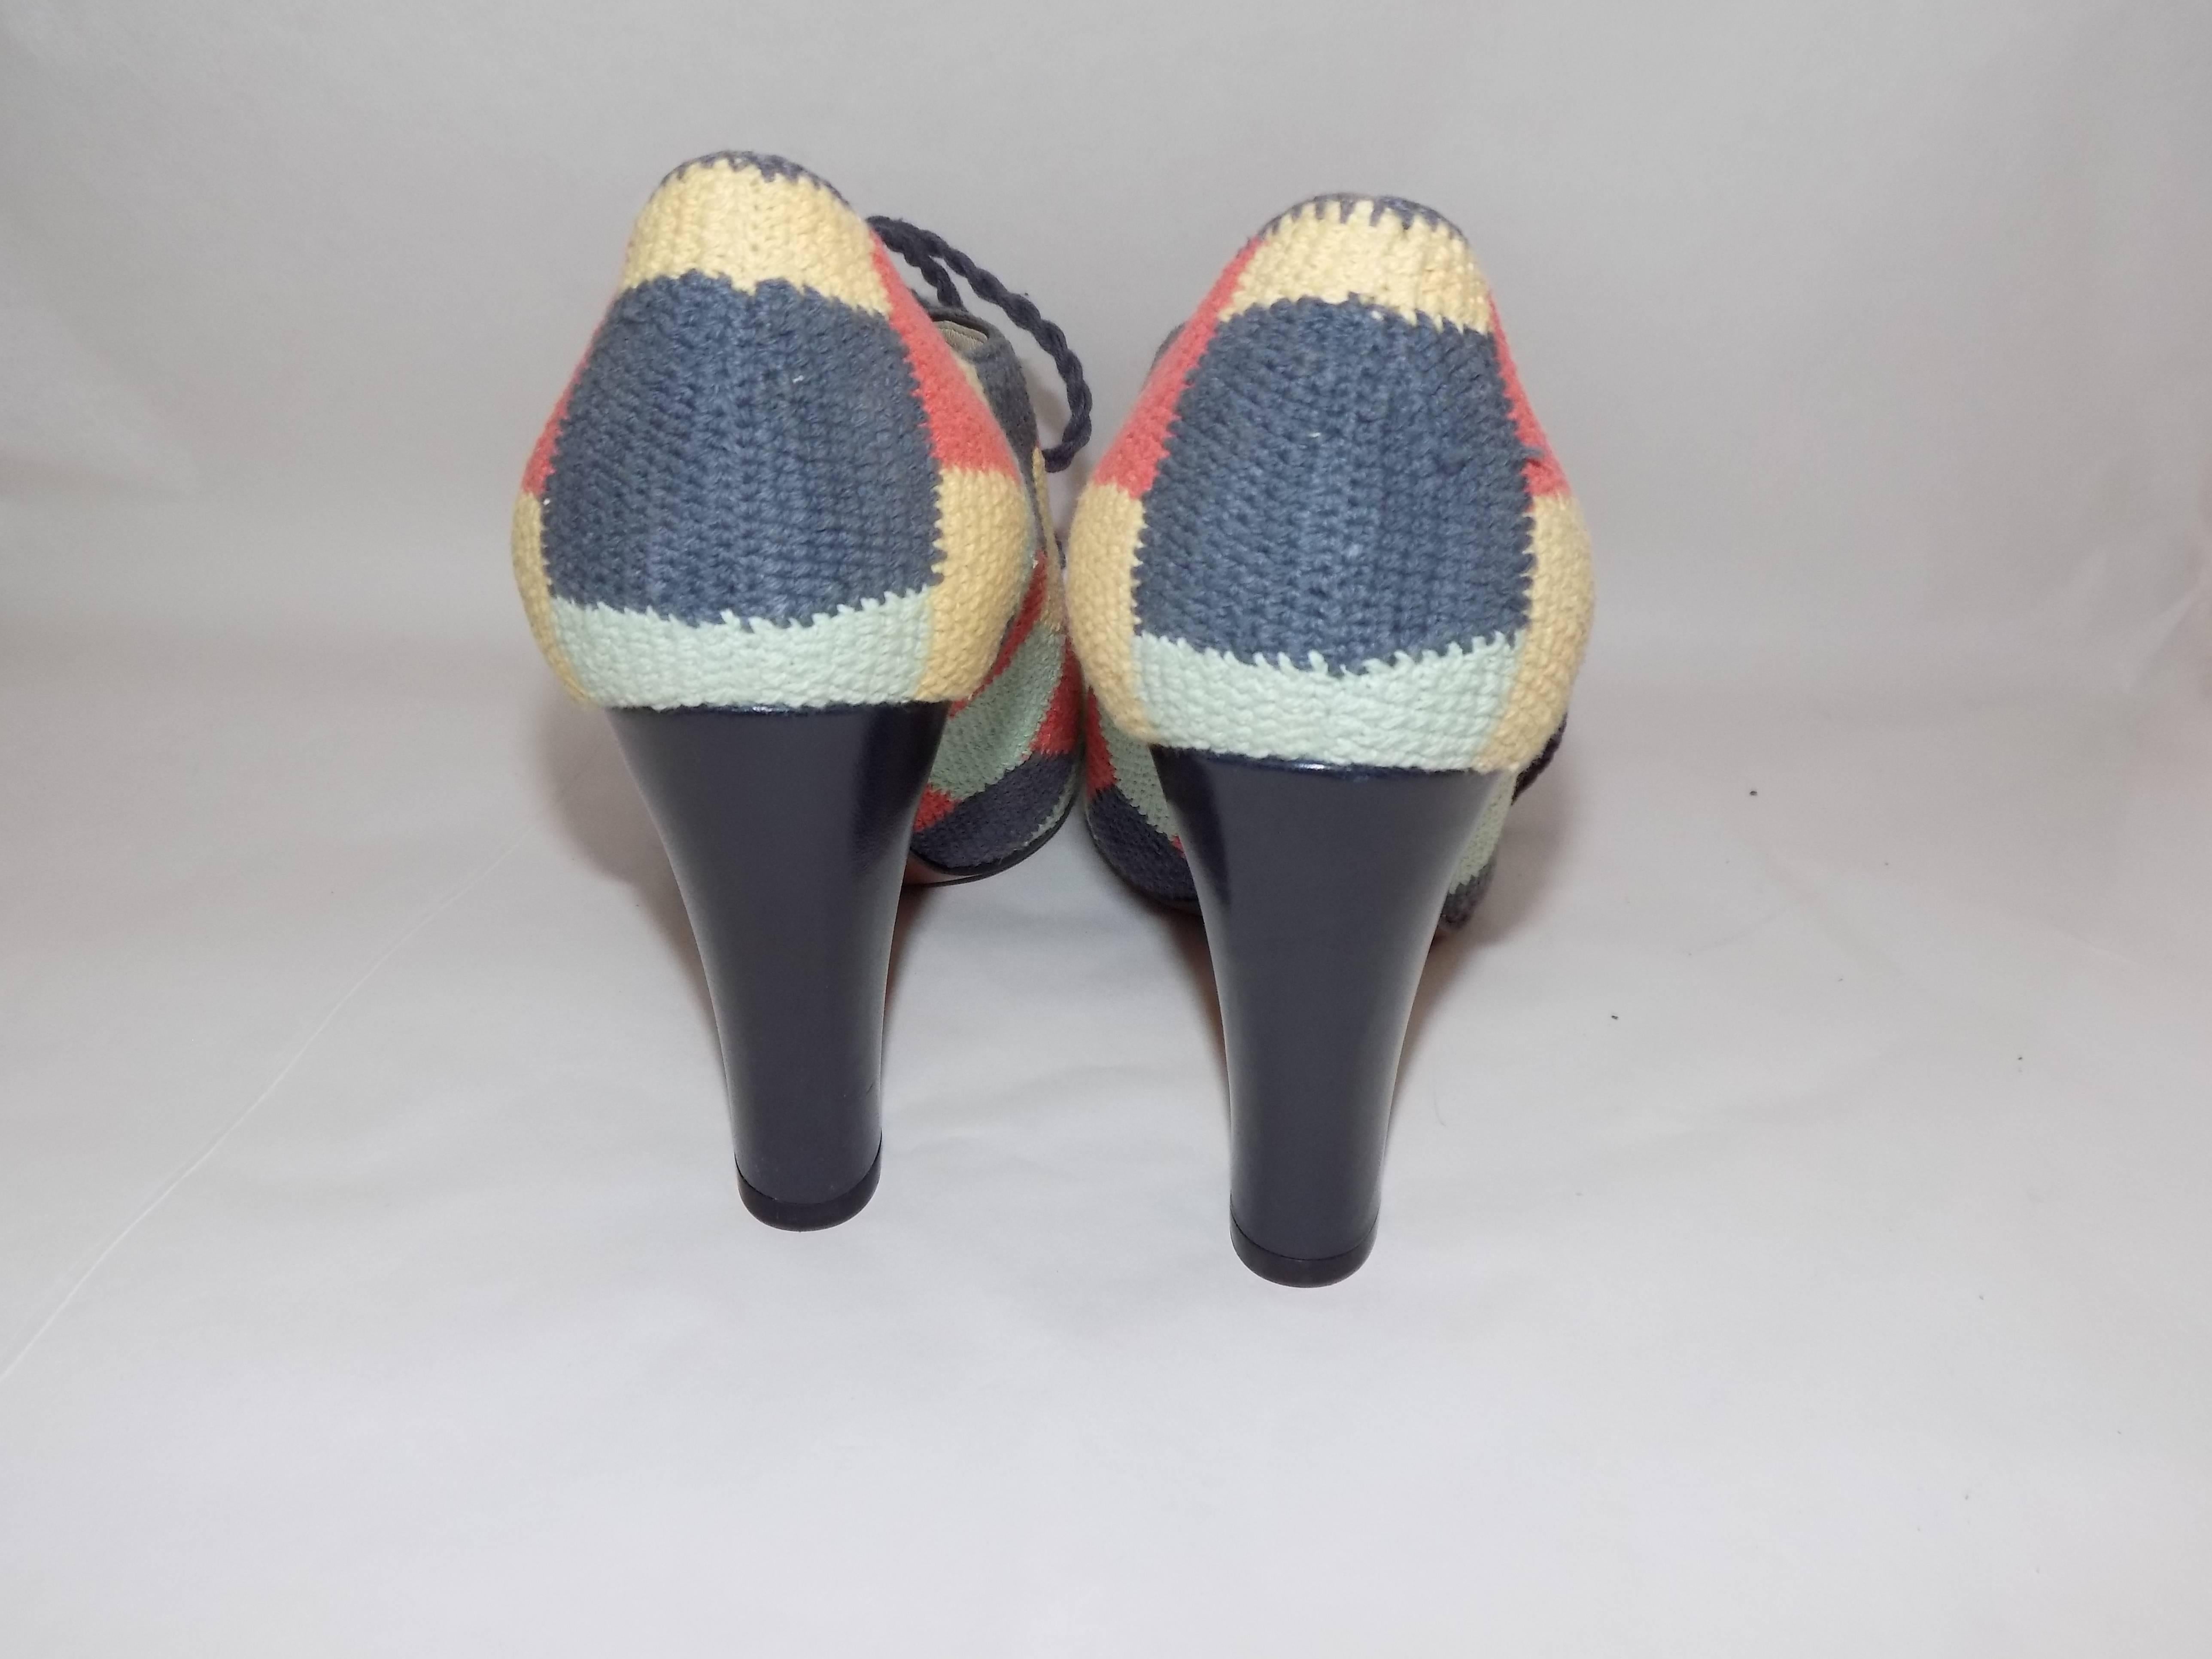  Iconic Salvatore Ferragamo limited Museum  edition crochet  oxford shoes For Sale 1